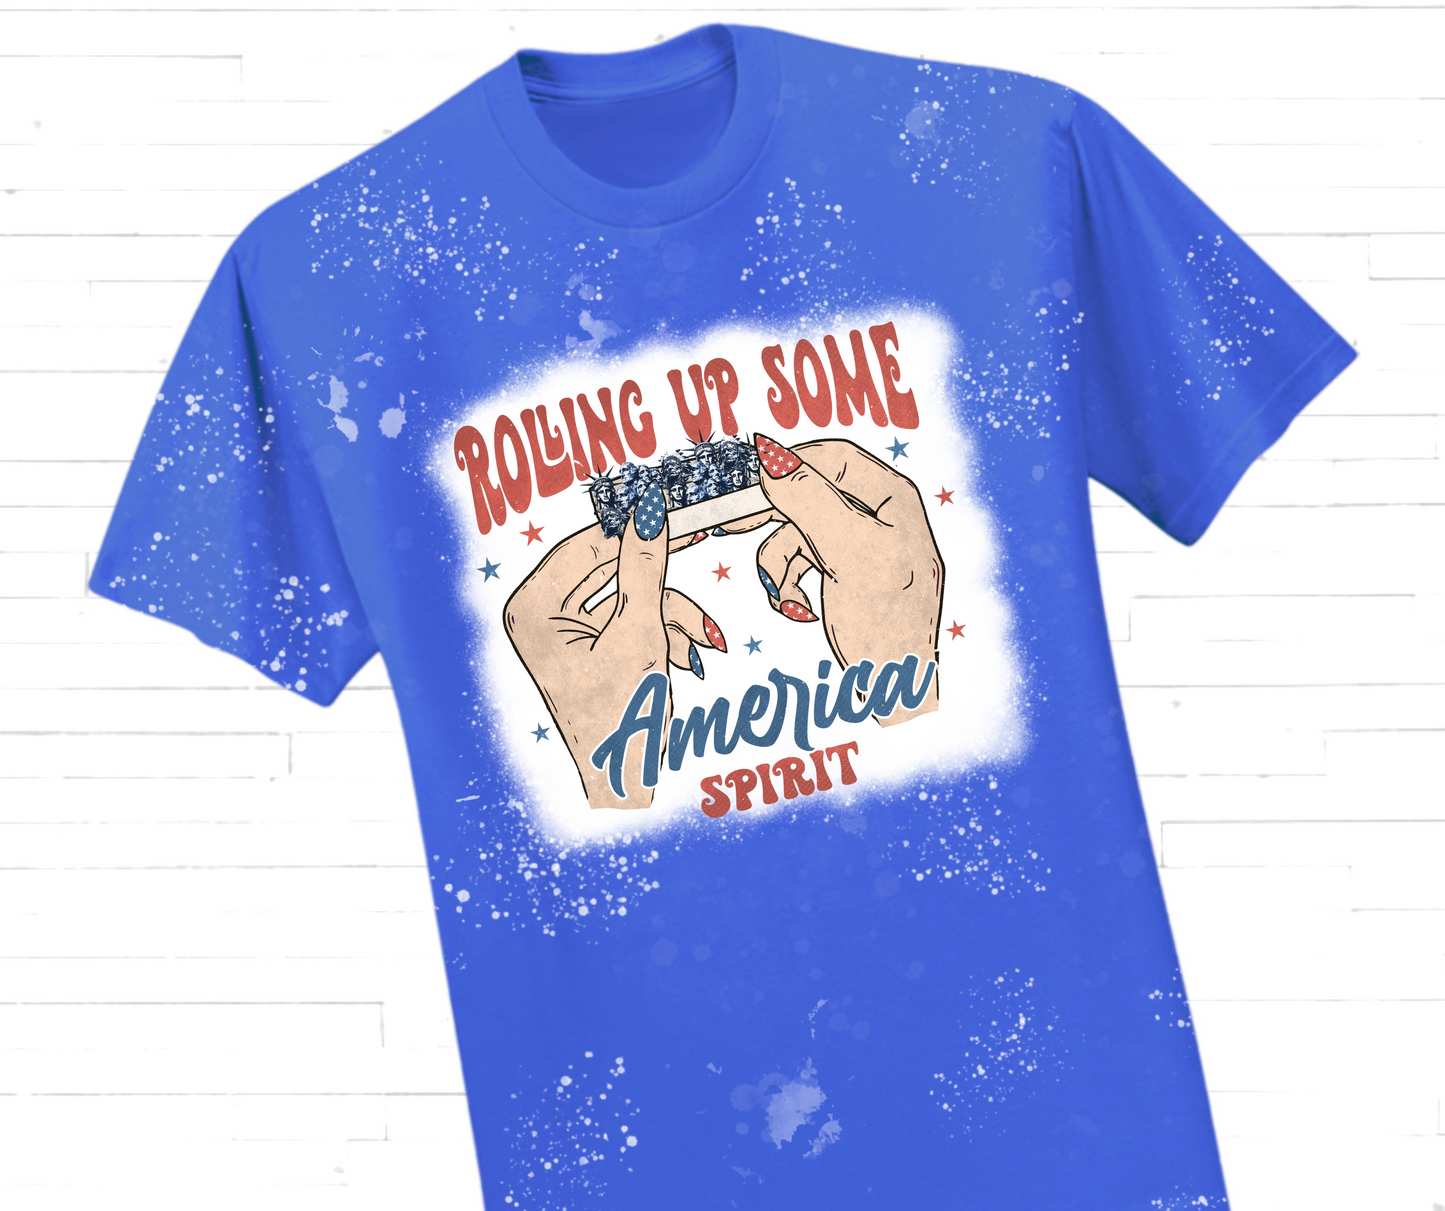 Rolling Up Some America Spirit T-Shirt